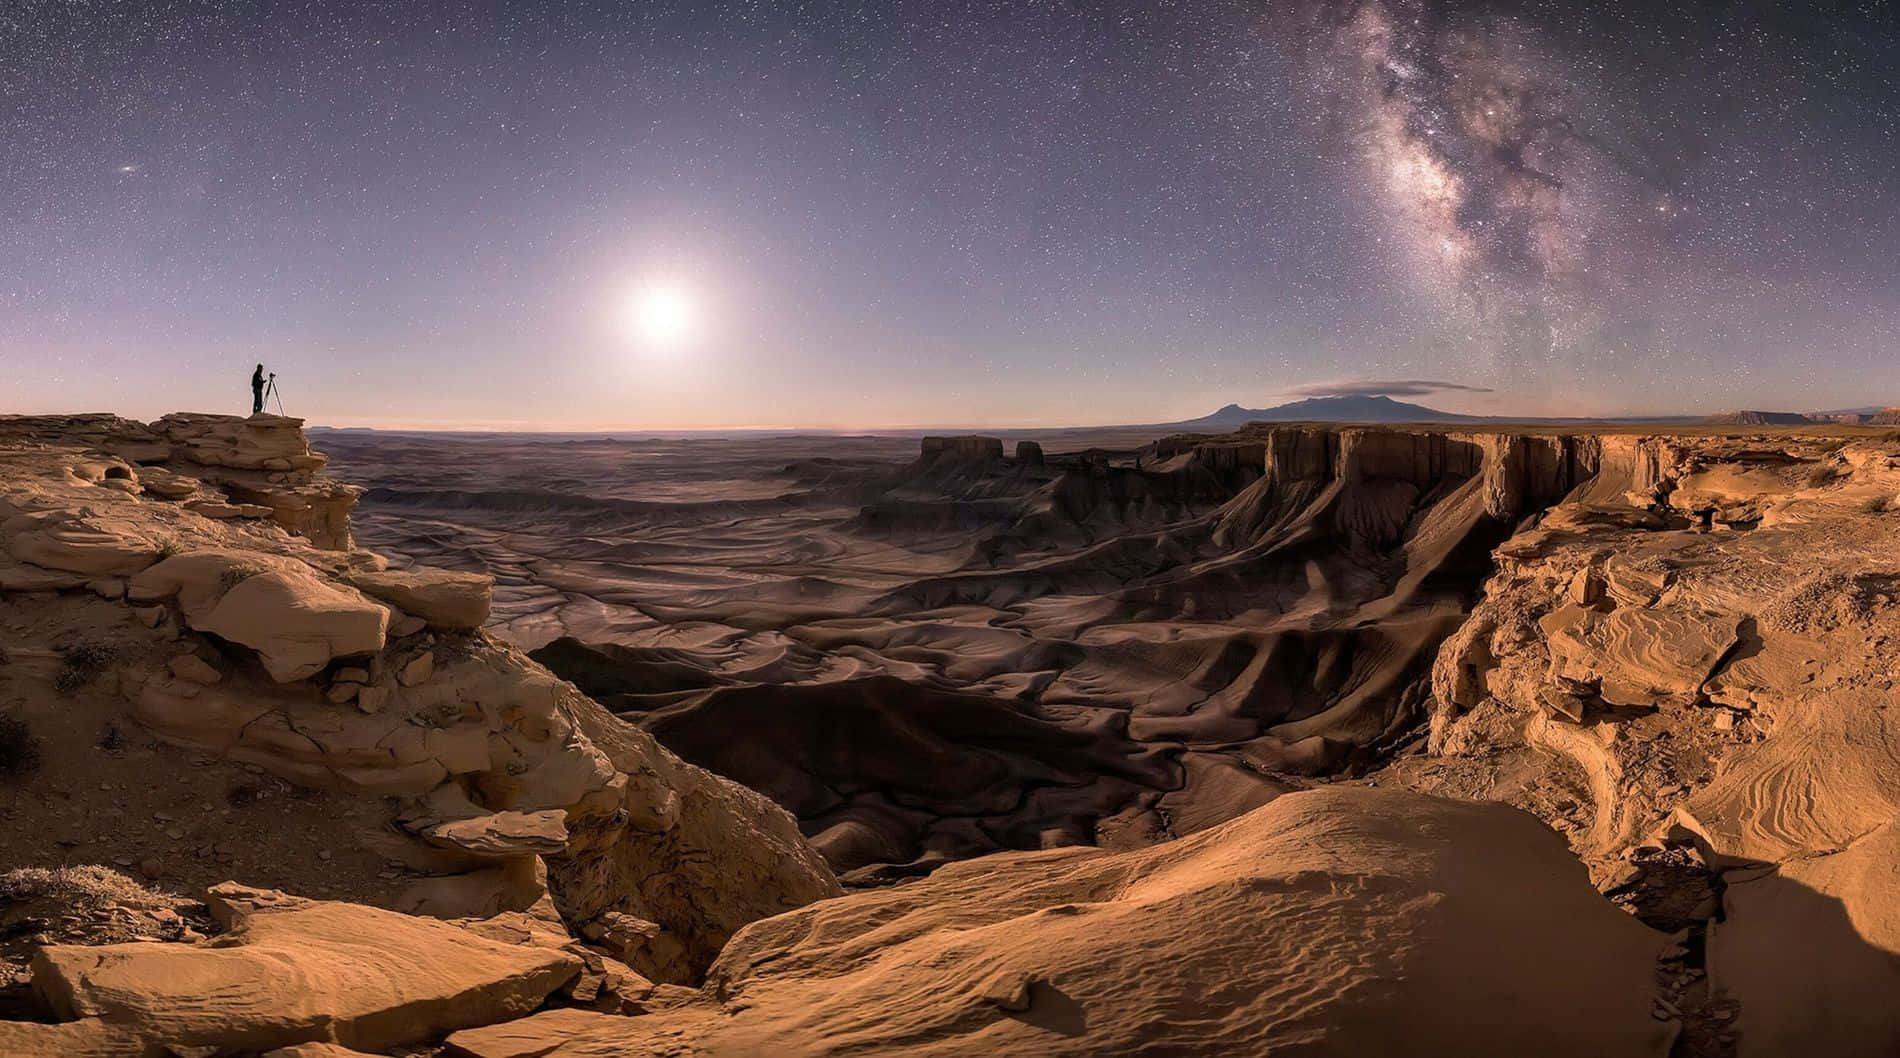 Desert Starry Night Astronomy Picture